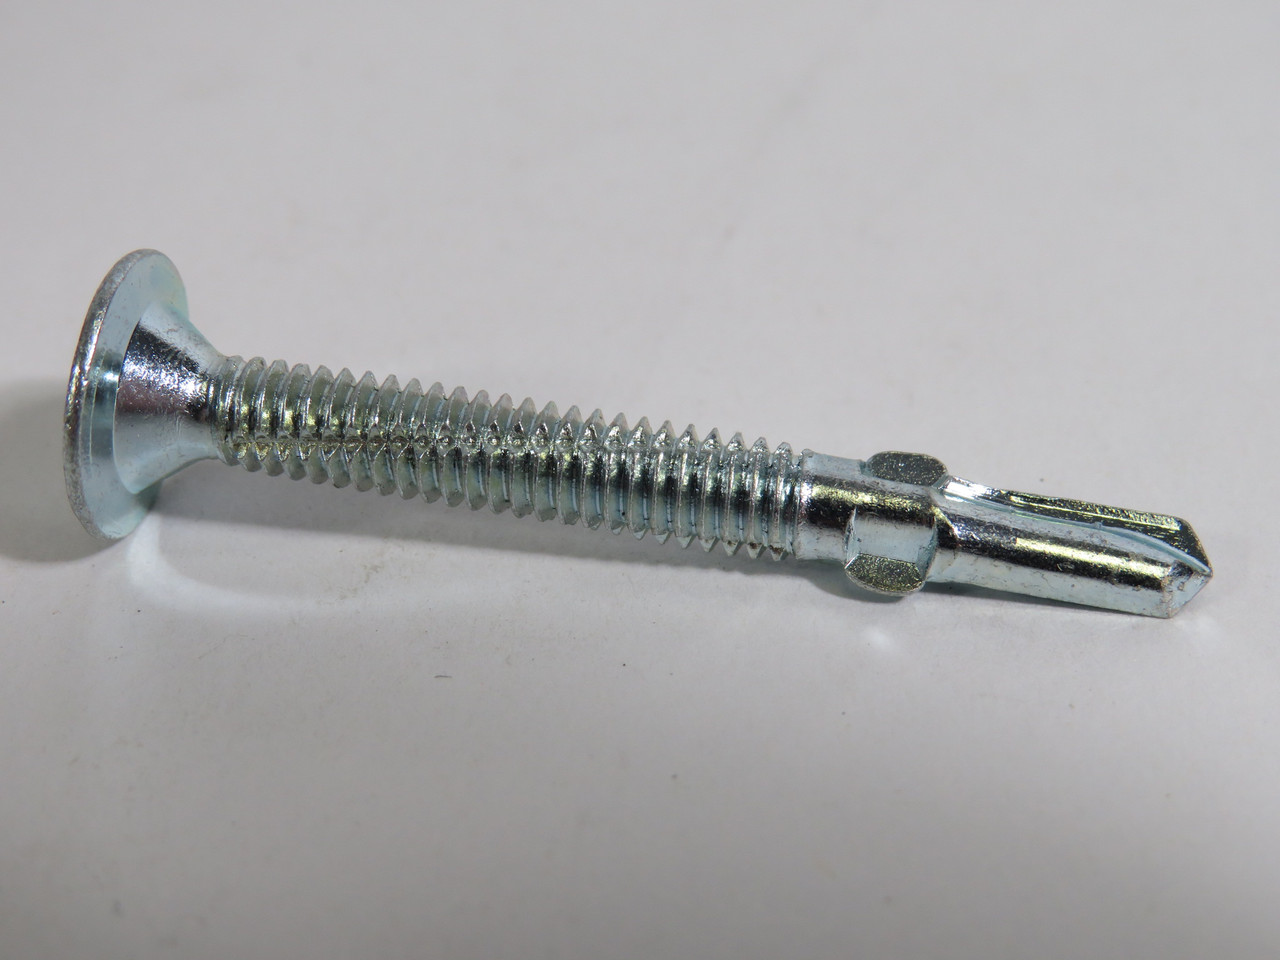 Spaenaur 508-401 Self-Drilling Screw #12-24 X 2" 1-1/8" LG Thread Lot of 63 NEW